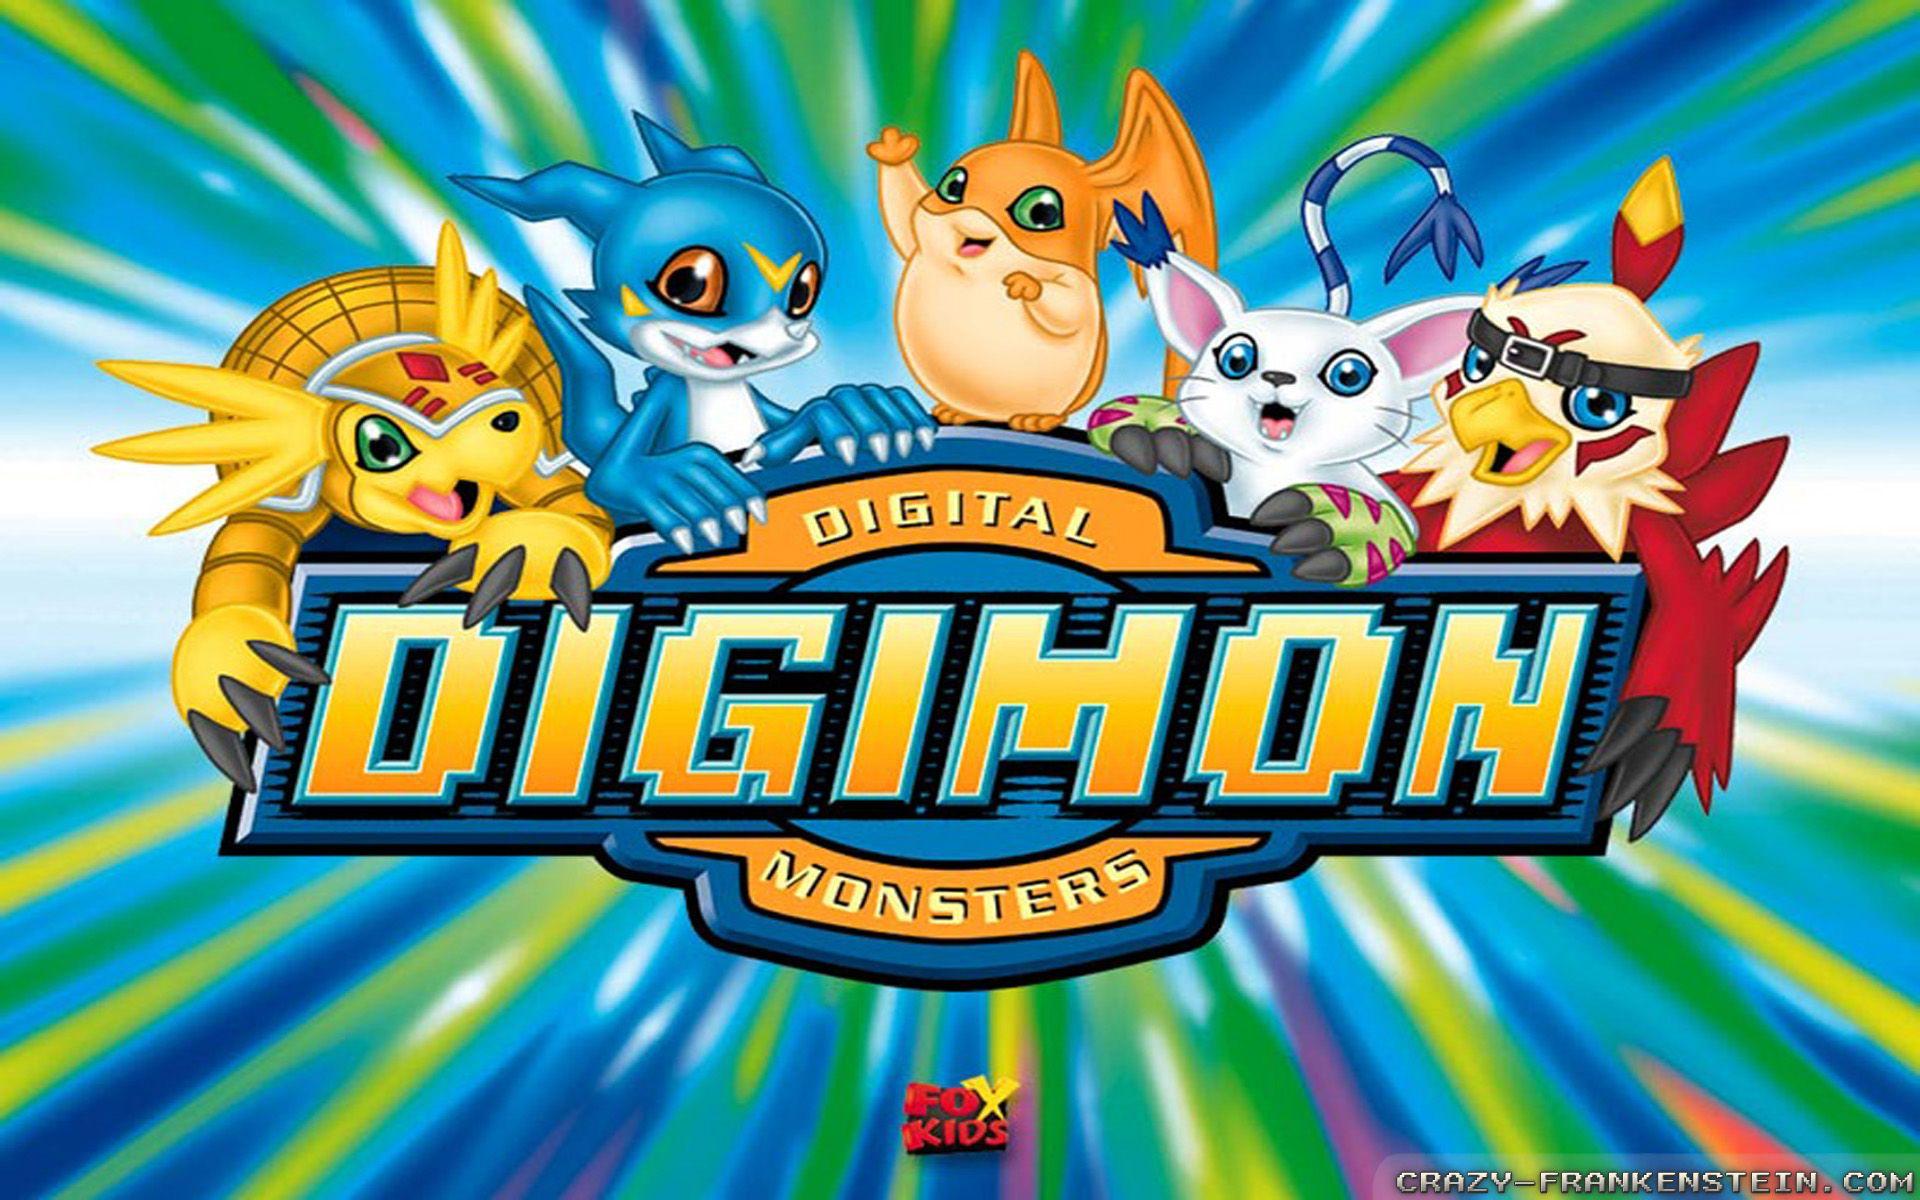 25 Digimon Hd Wallpapers Backgrounds Wallpaper Abyss - Gambaran